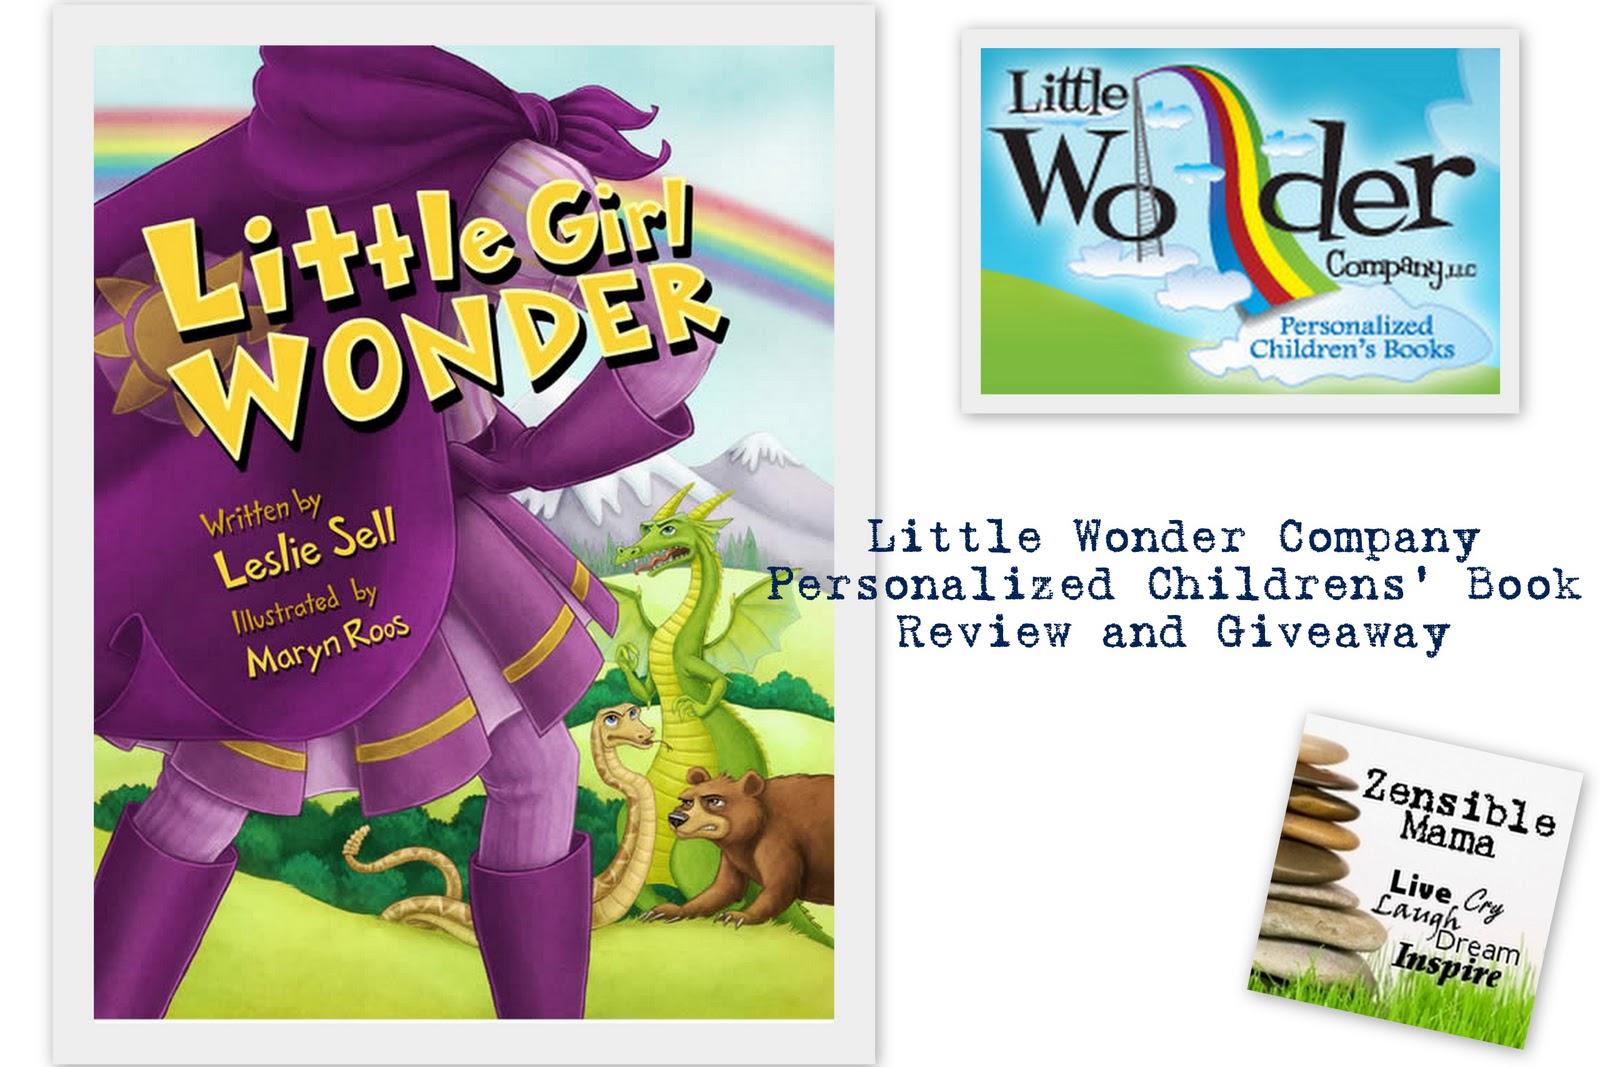 Zensible Mama: My Little Girl Wonder from Little Wonder Company